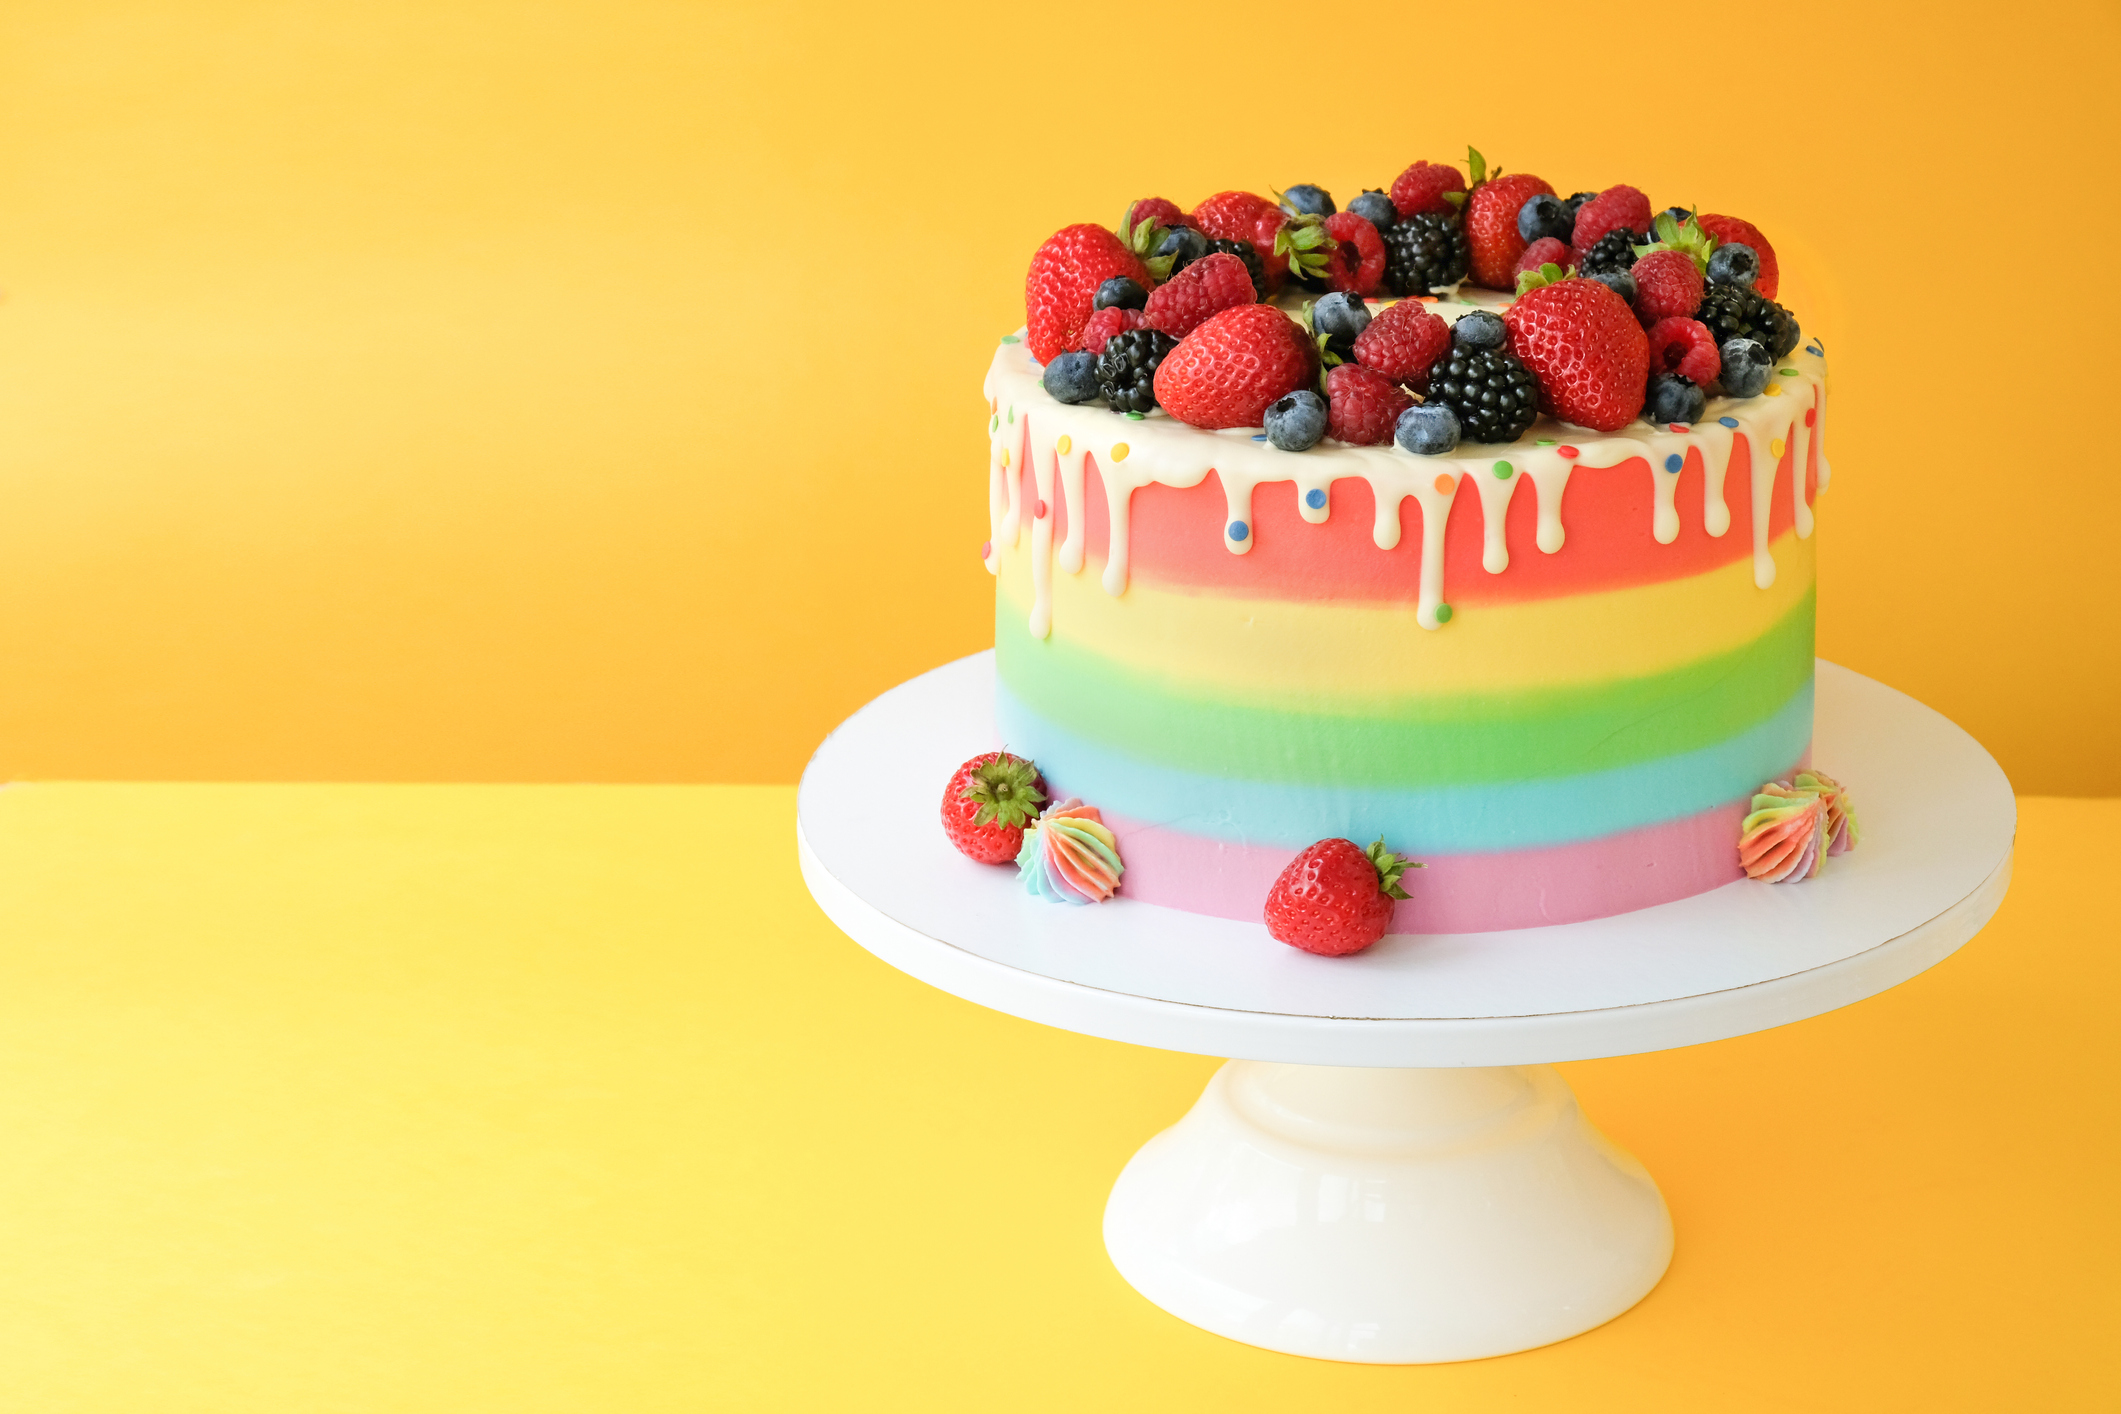 Dopl3r Com Memes The Best Surprise Birthday Cake For Girls